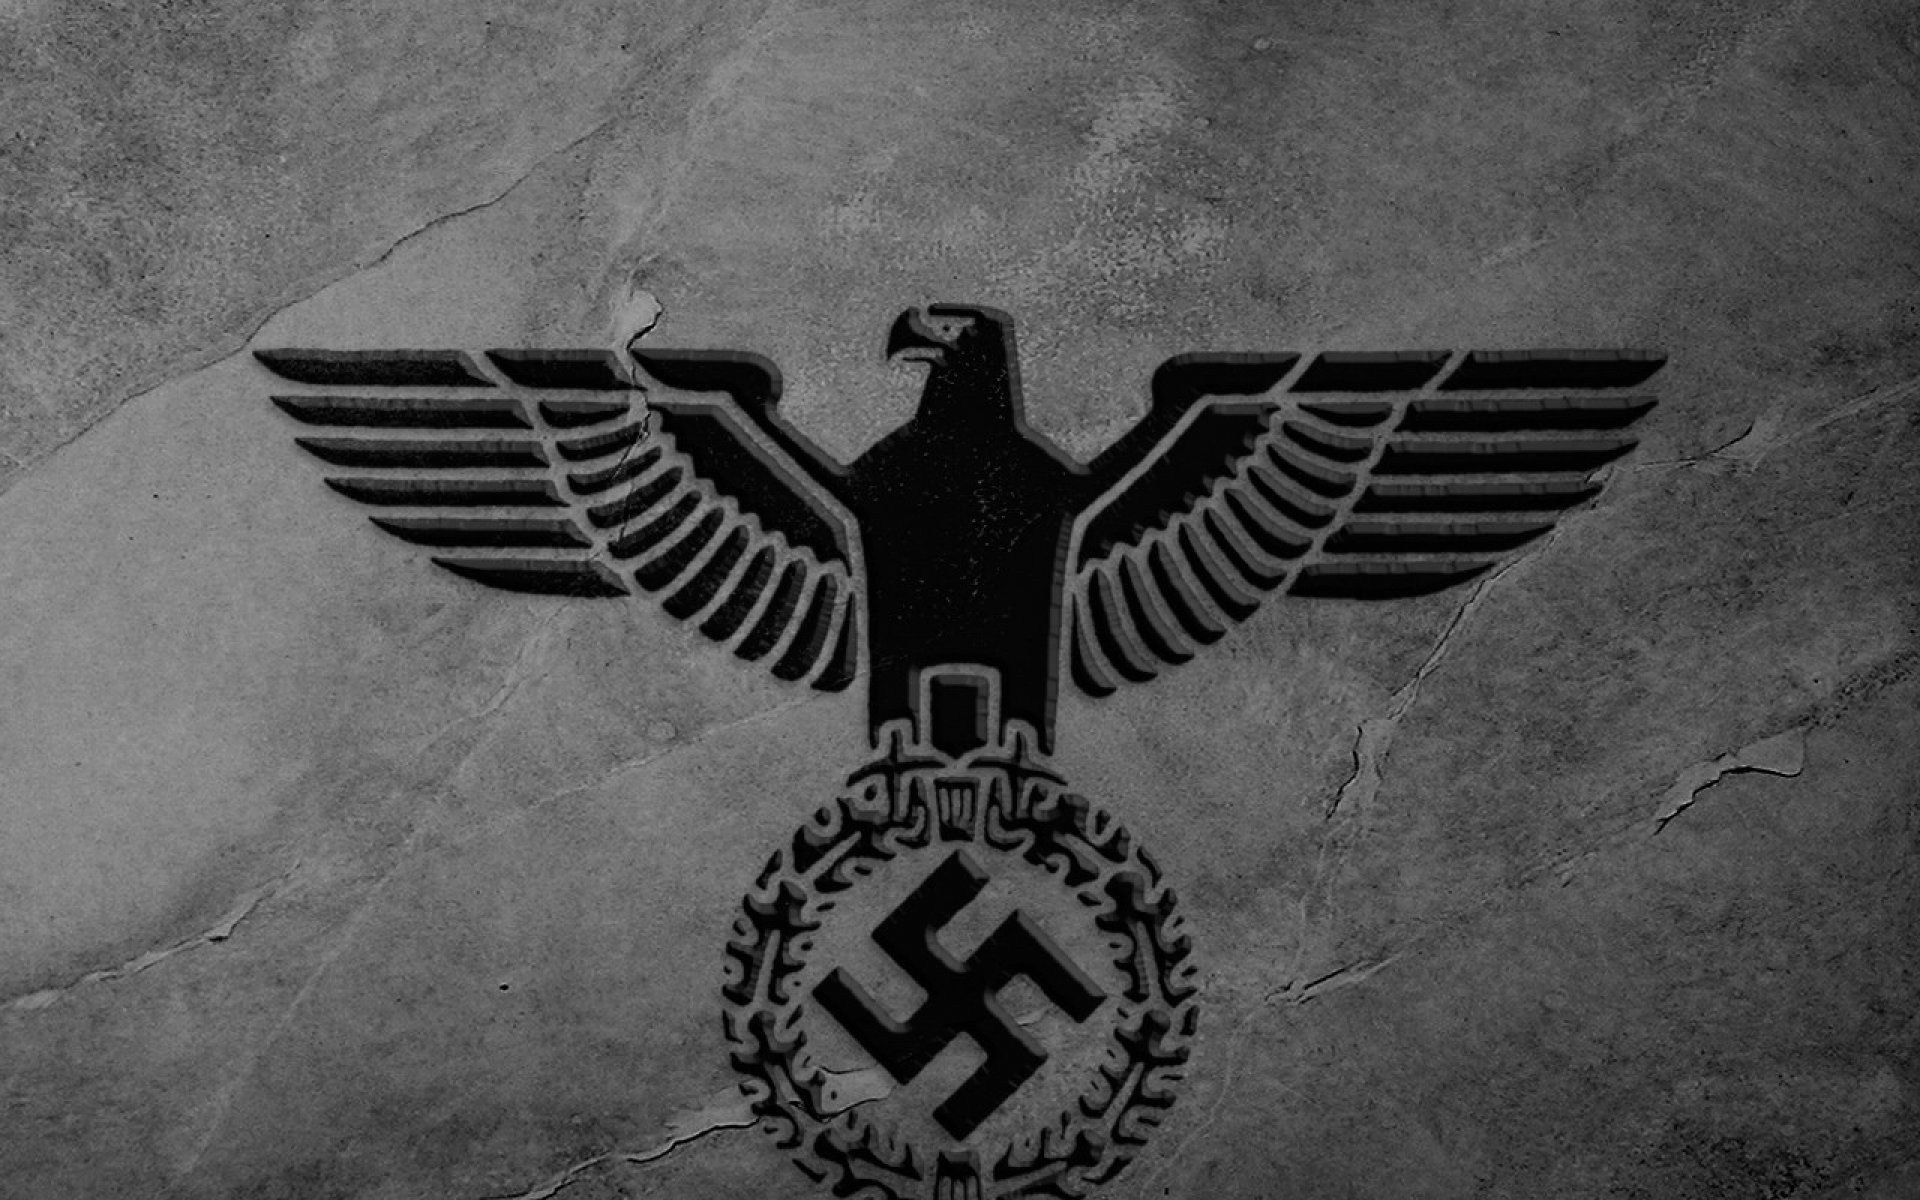 nazi, History, Adolf, Hitler, Dark, Evil, Military, Anarchy, War